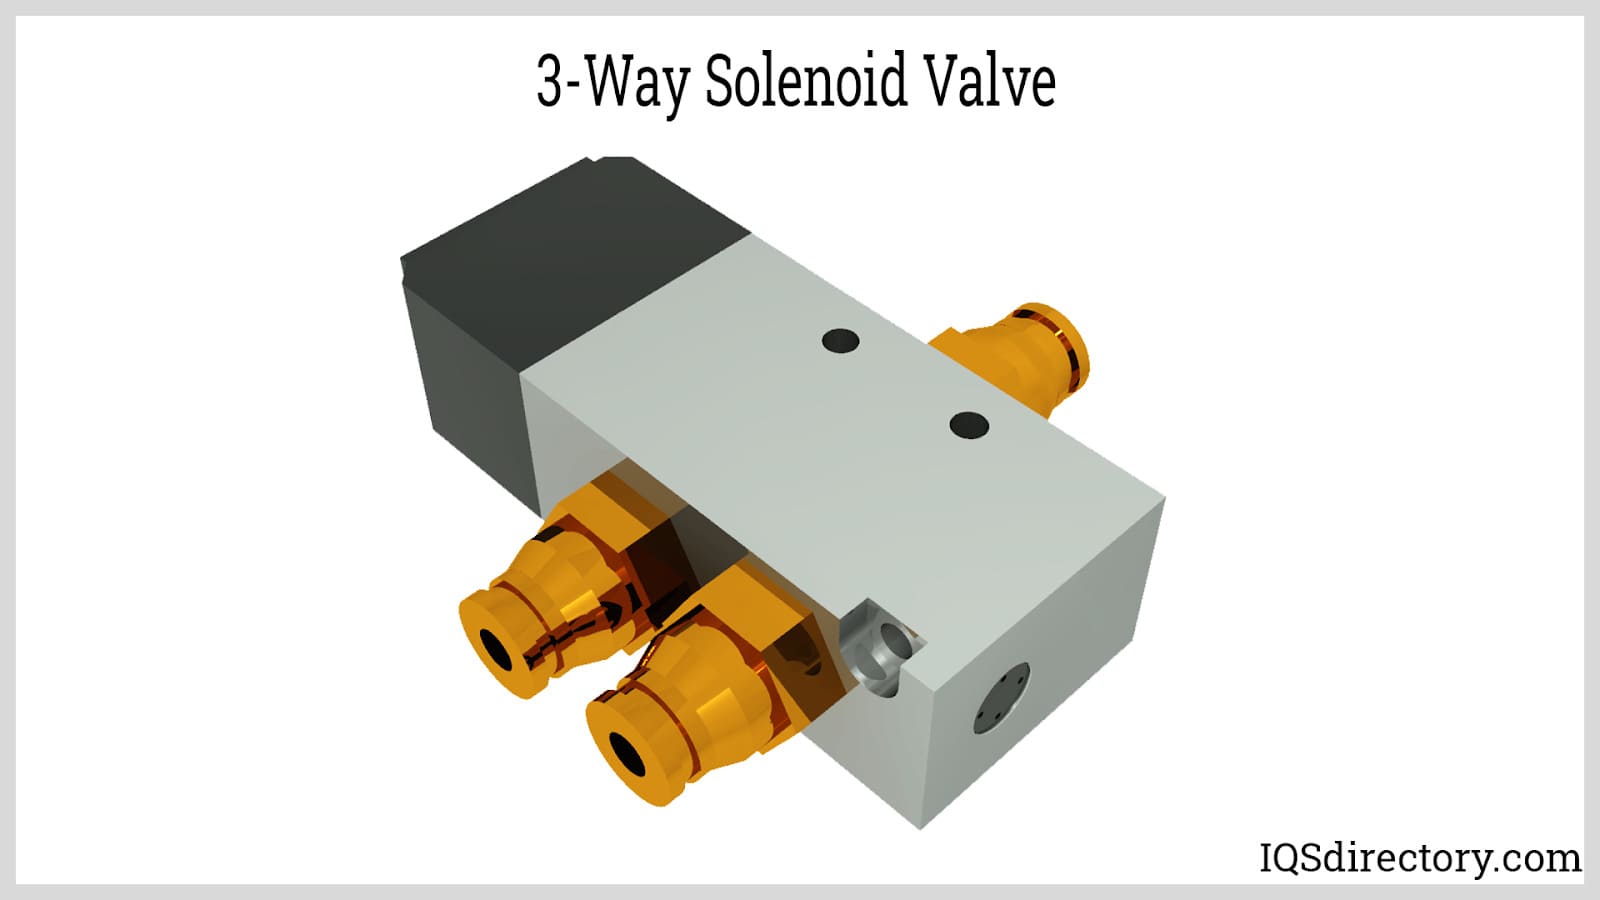 https://www.iqsdirectory.com/articles/solenoid-valve/three-way-solenoid-valve/3-way-solenoid-valve.jpg